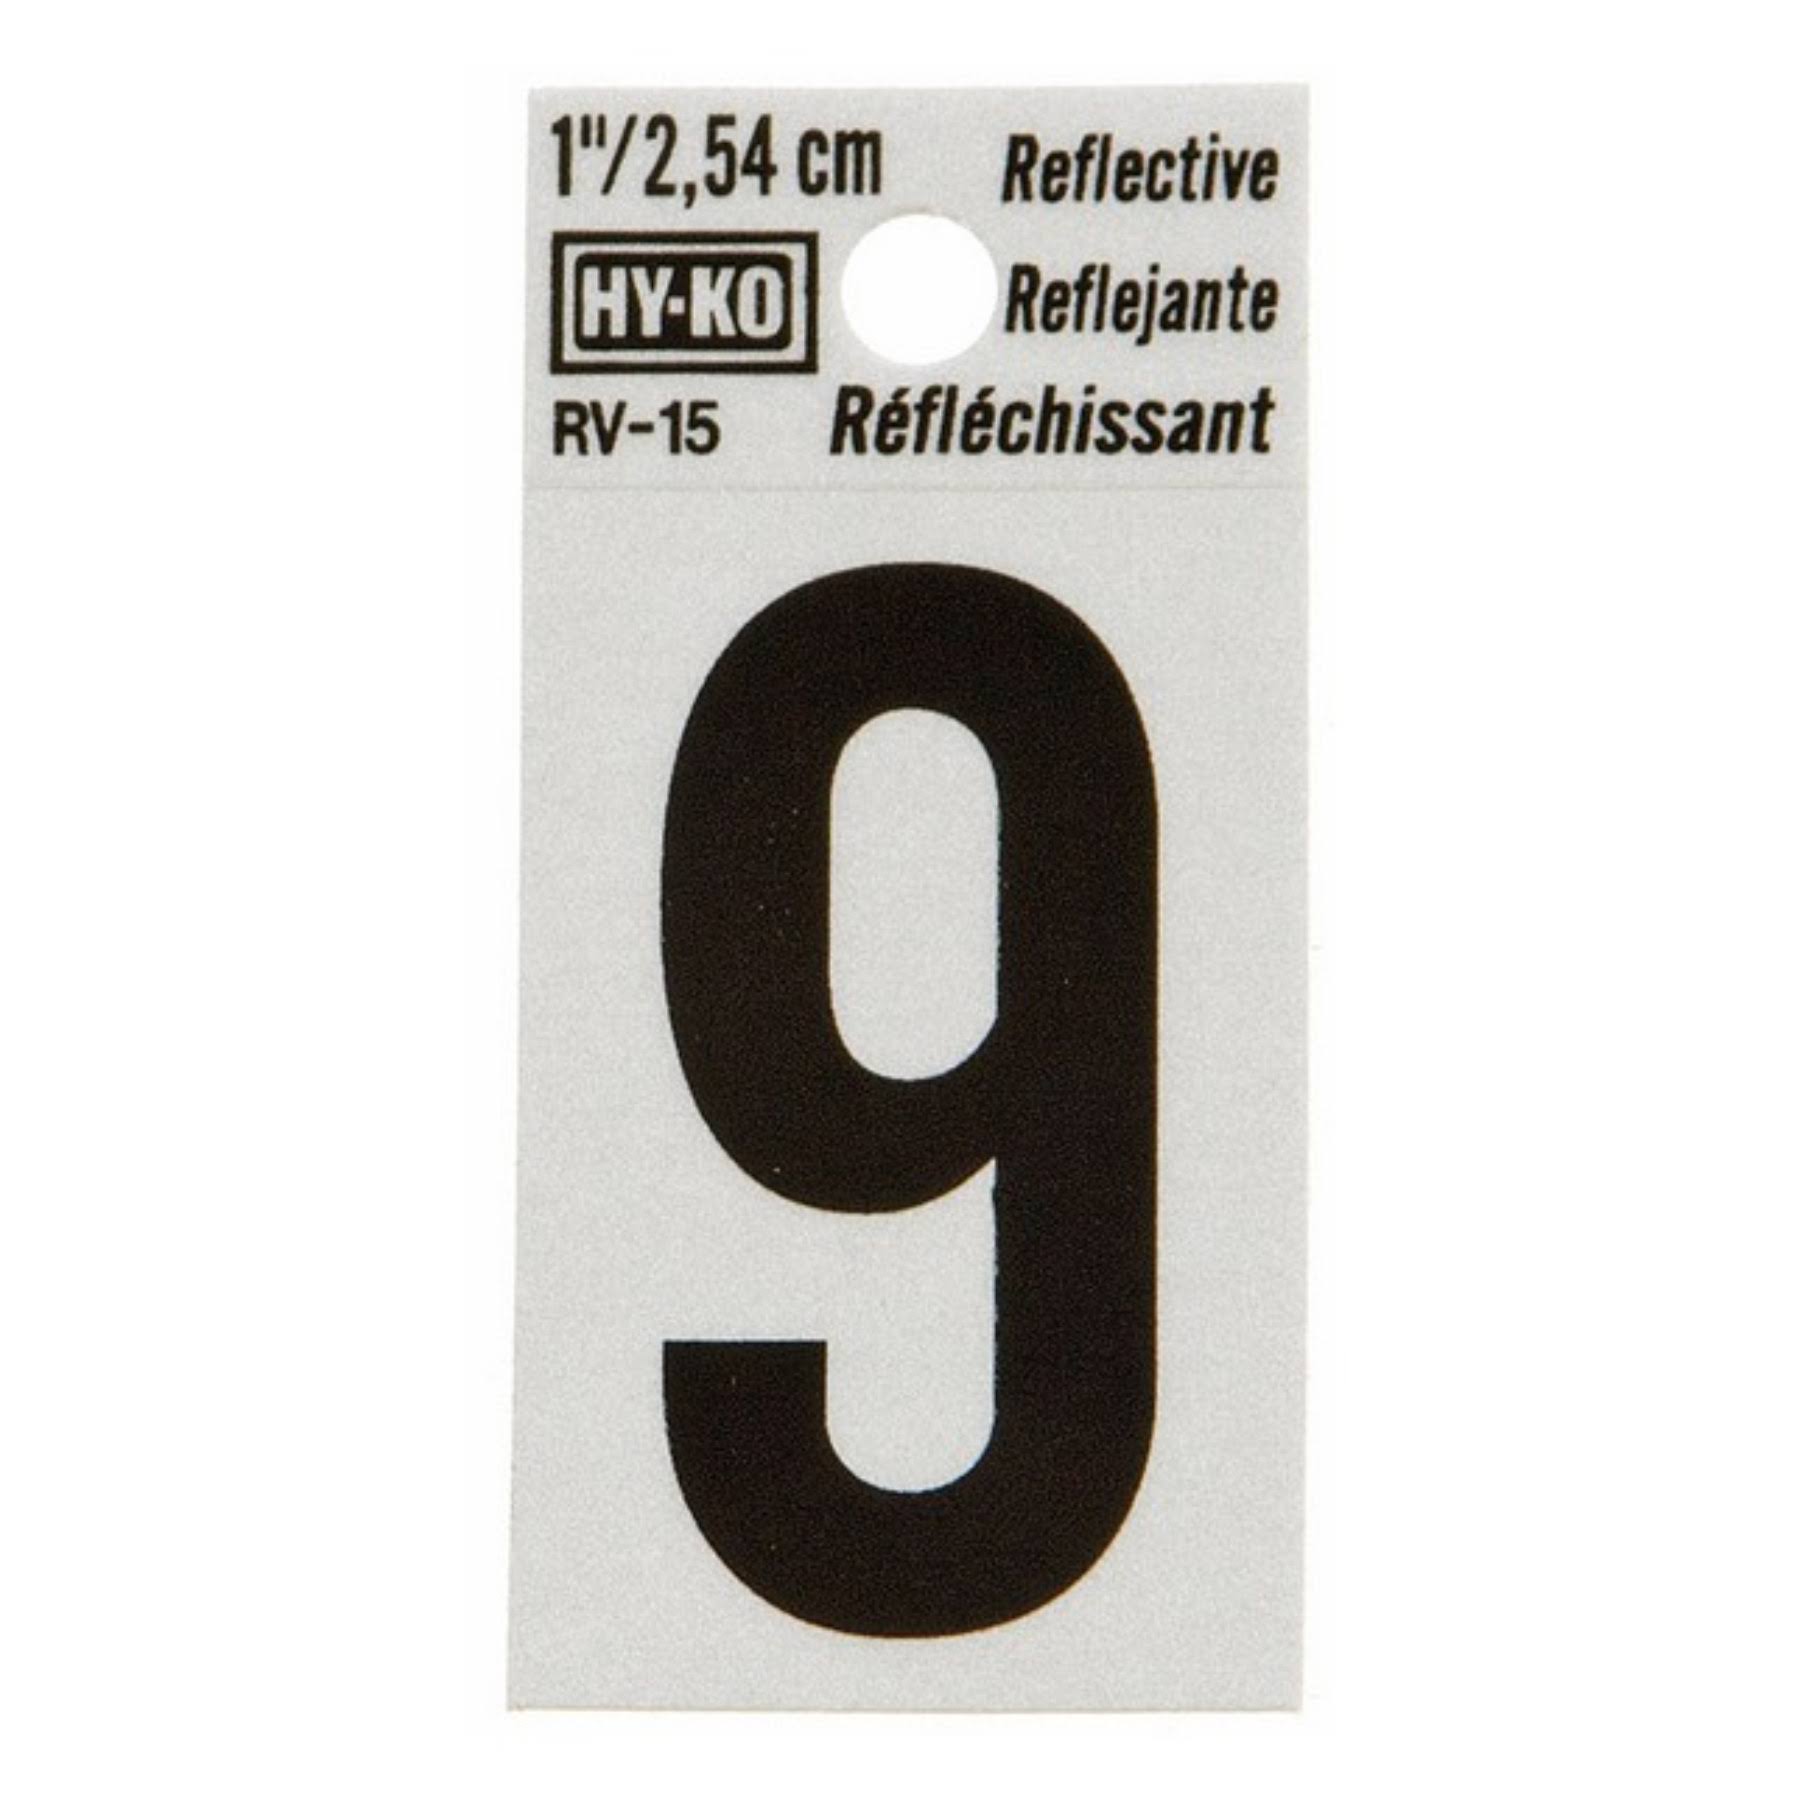 Hy-Ko Number 9 Reflective Adhesive Vinyl - Black, 1"